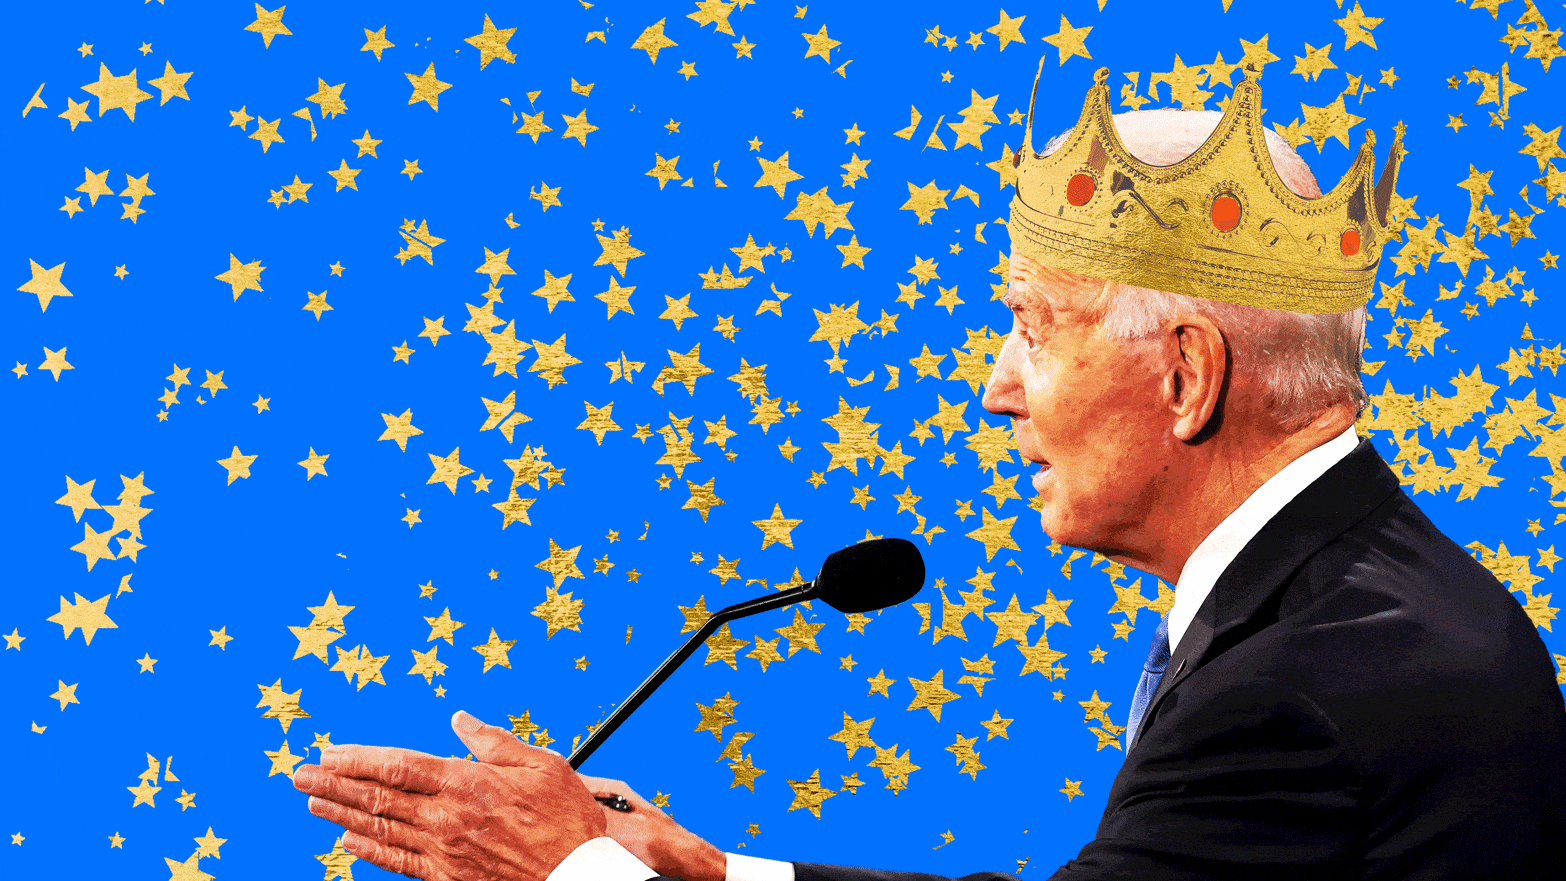 Joe Biden with a gold crown